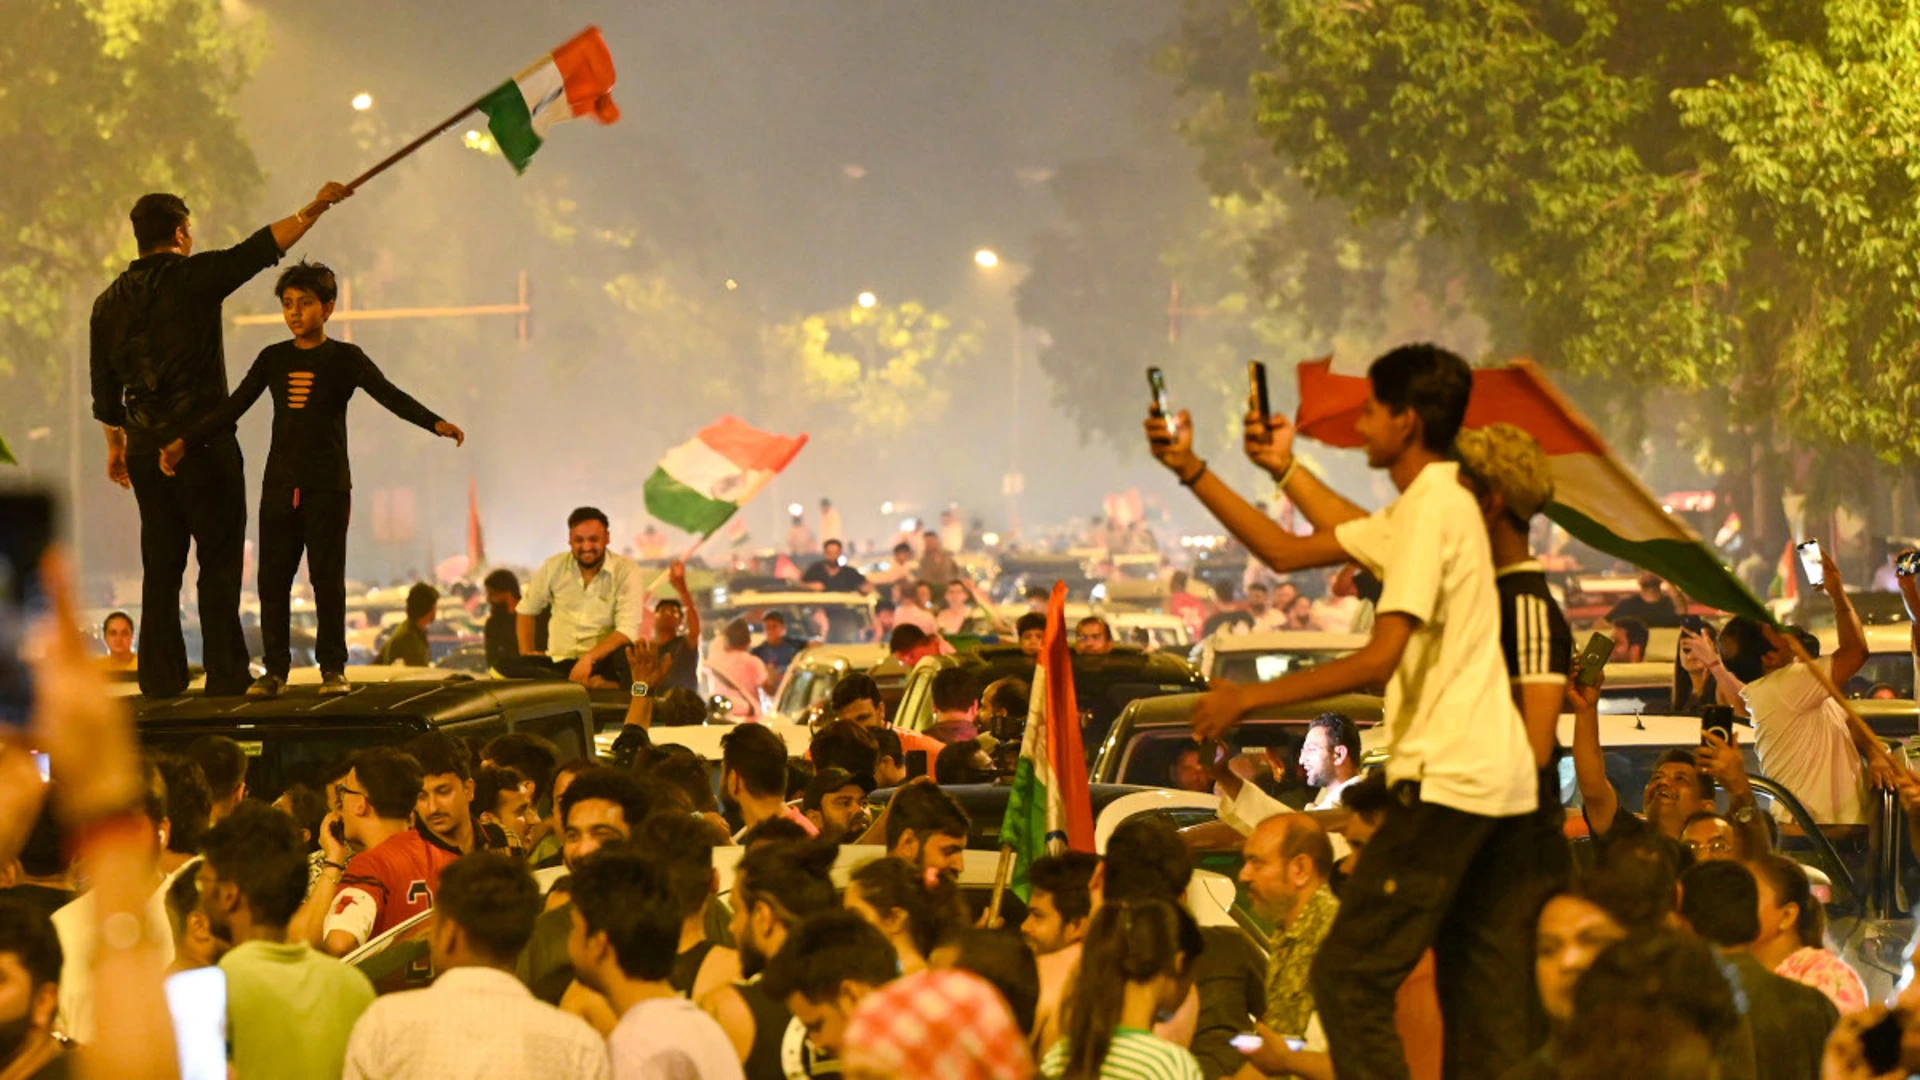 Fan frenzy as World Cup winners India finally return home